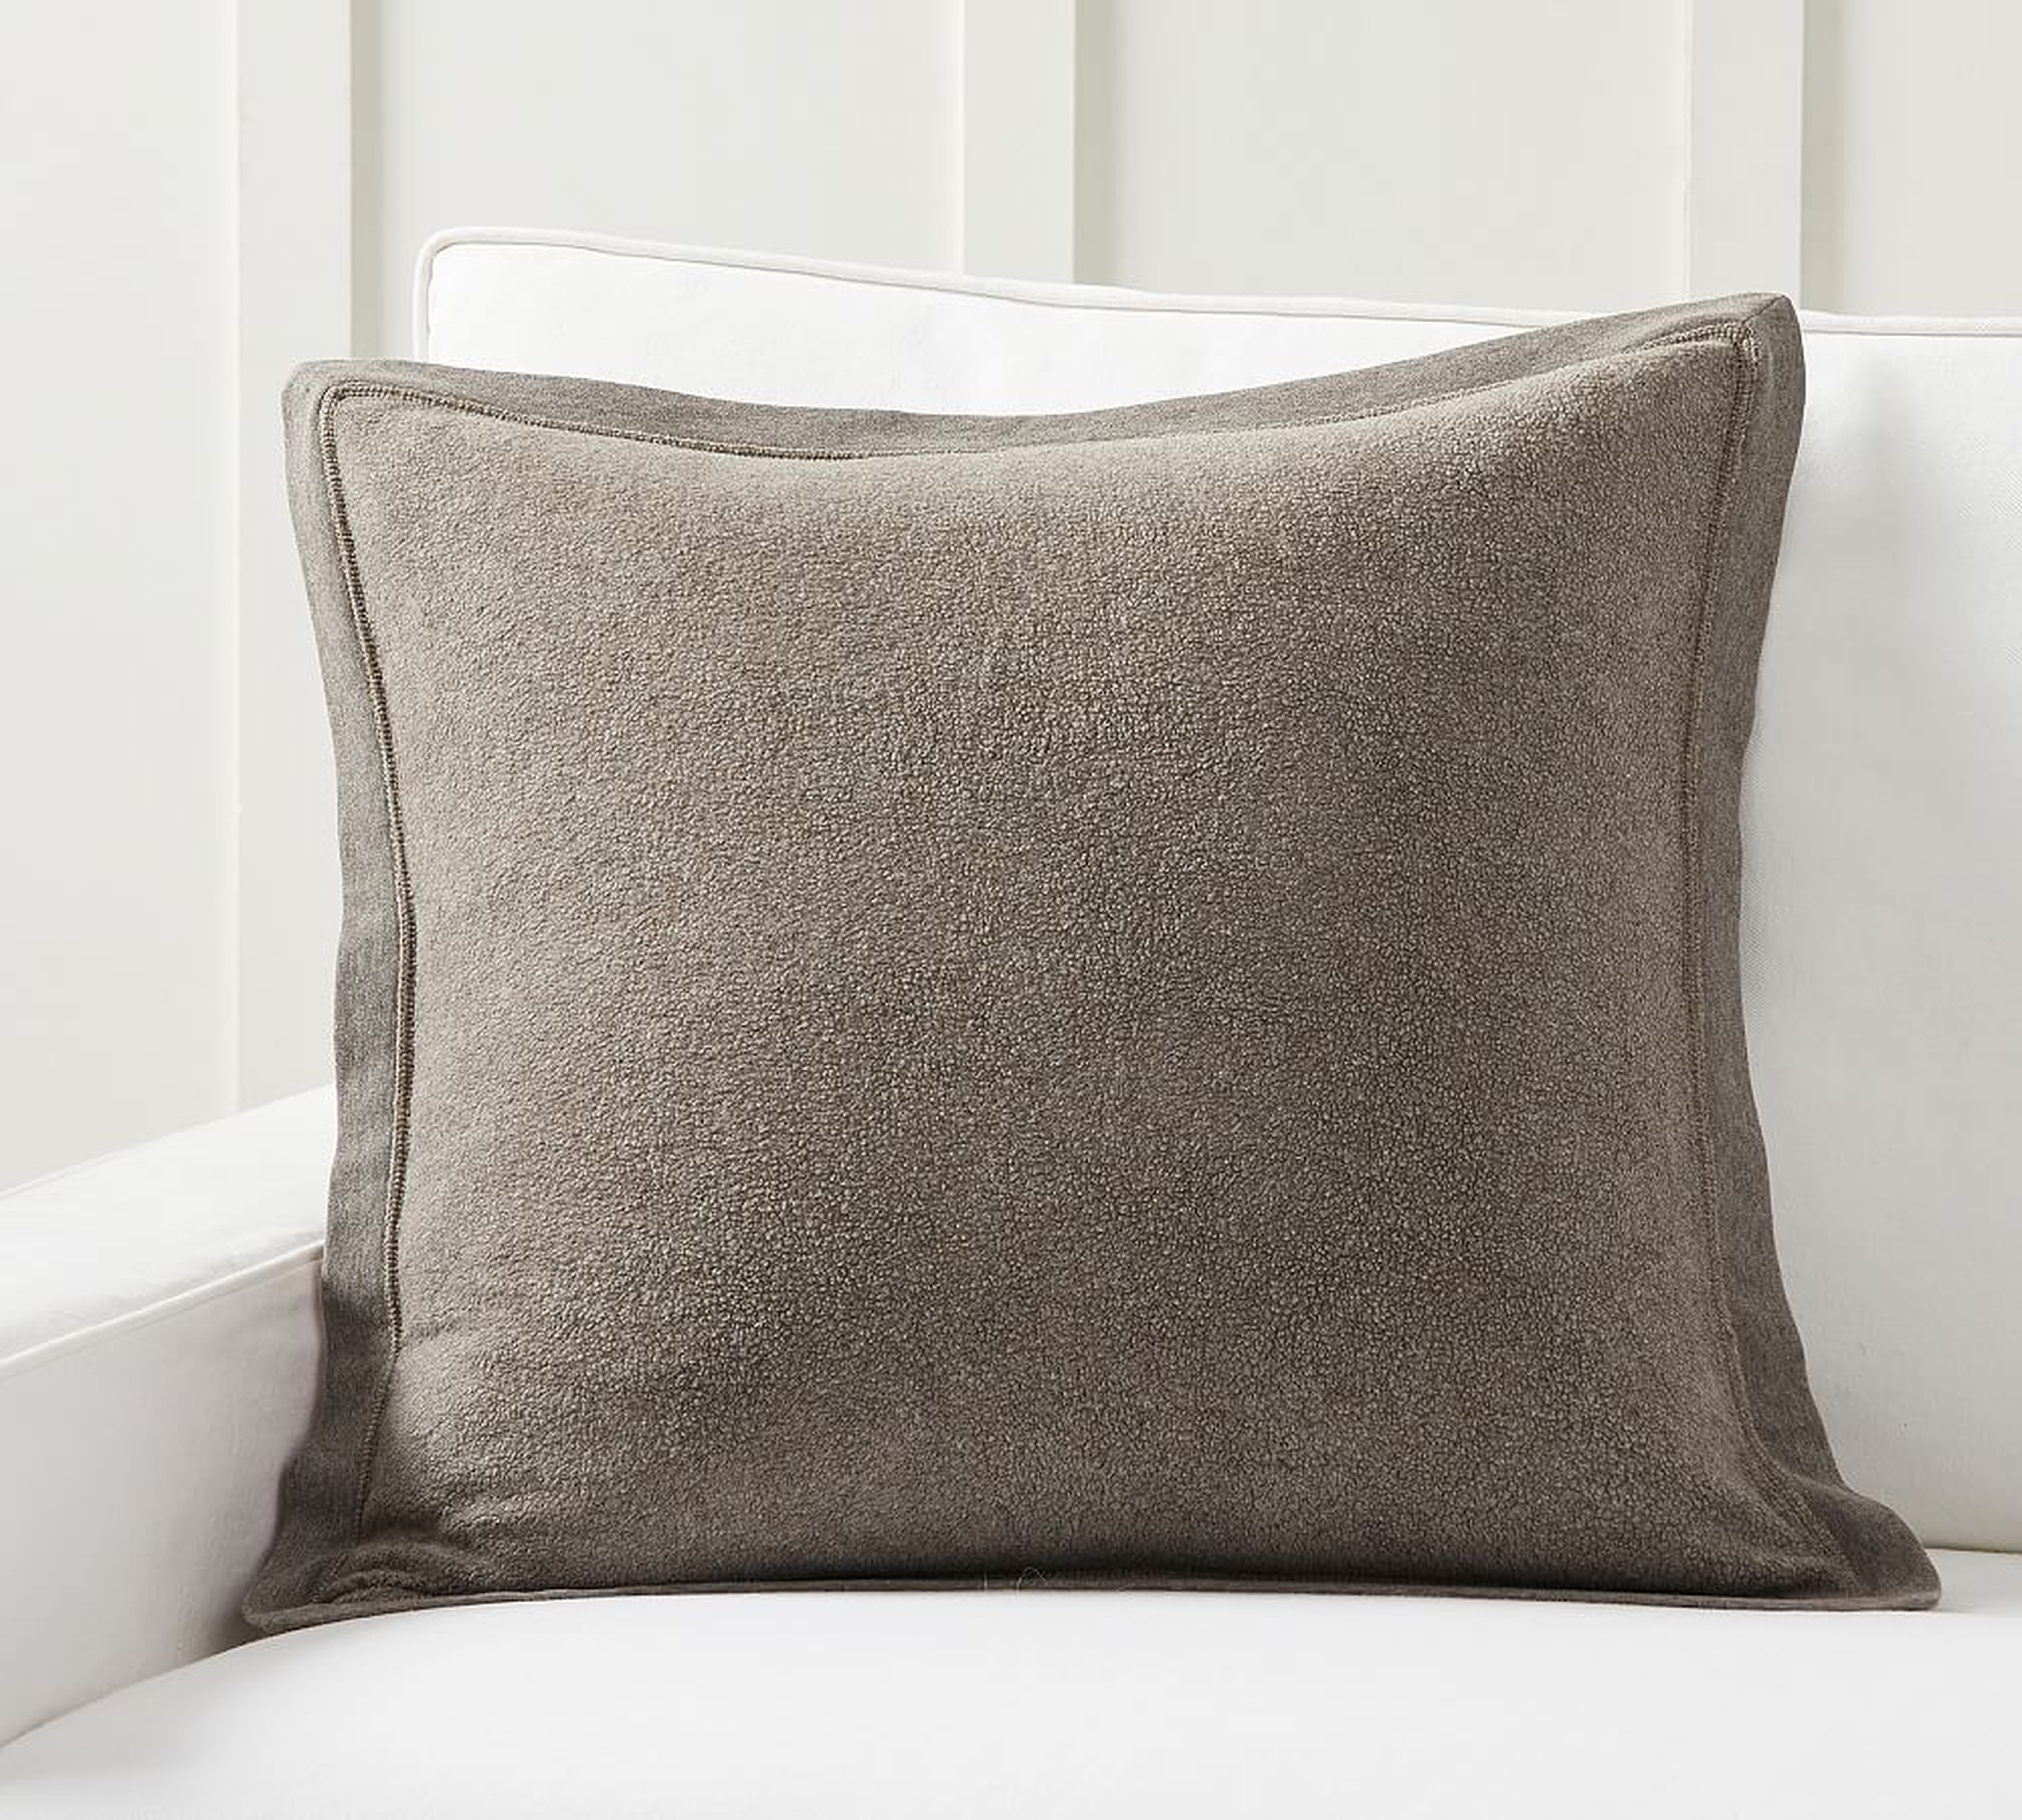 Cozy Fleece Pillow Cover, 22 x 22", Heathered Mushroom - Pottery Barn